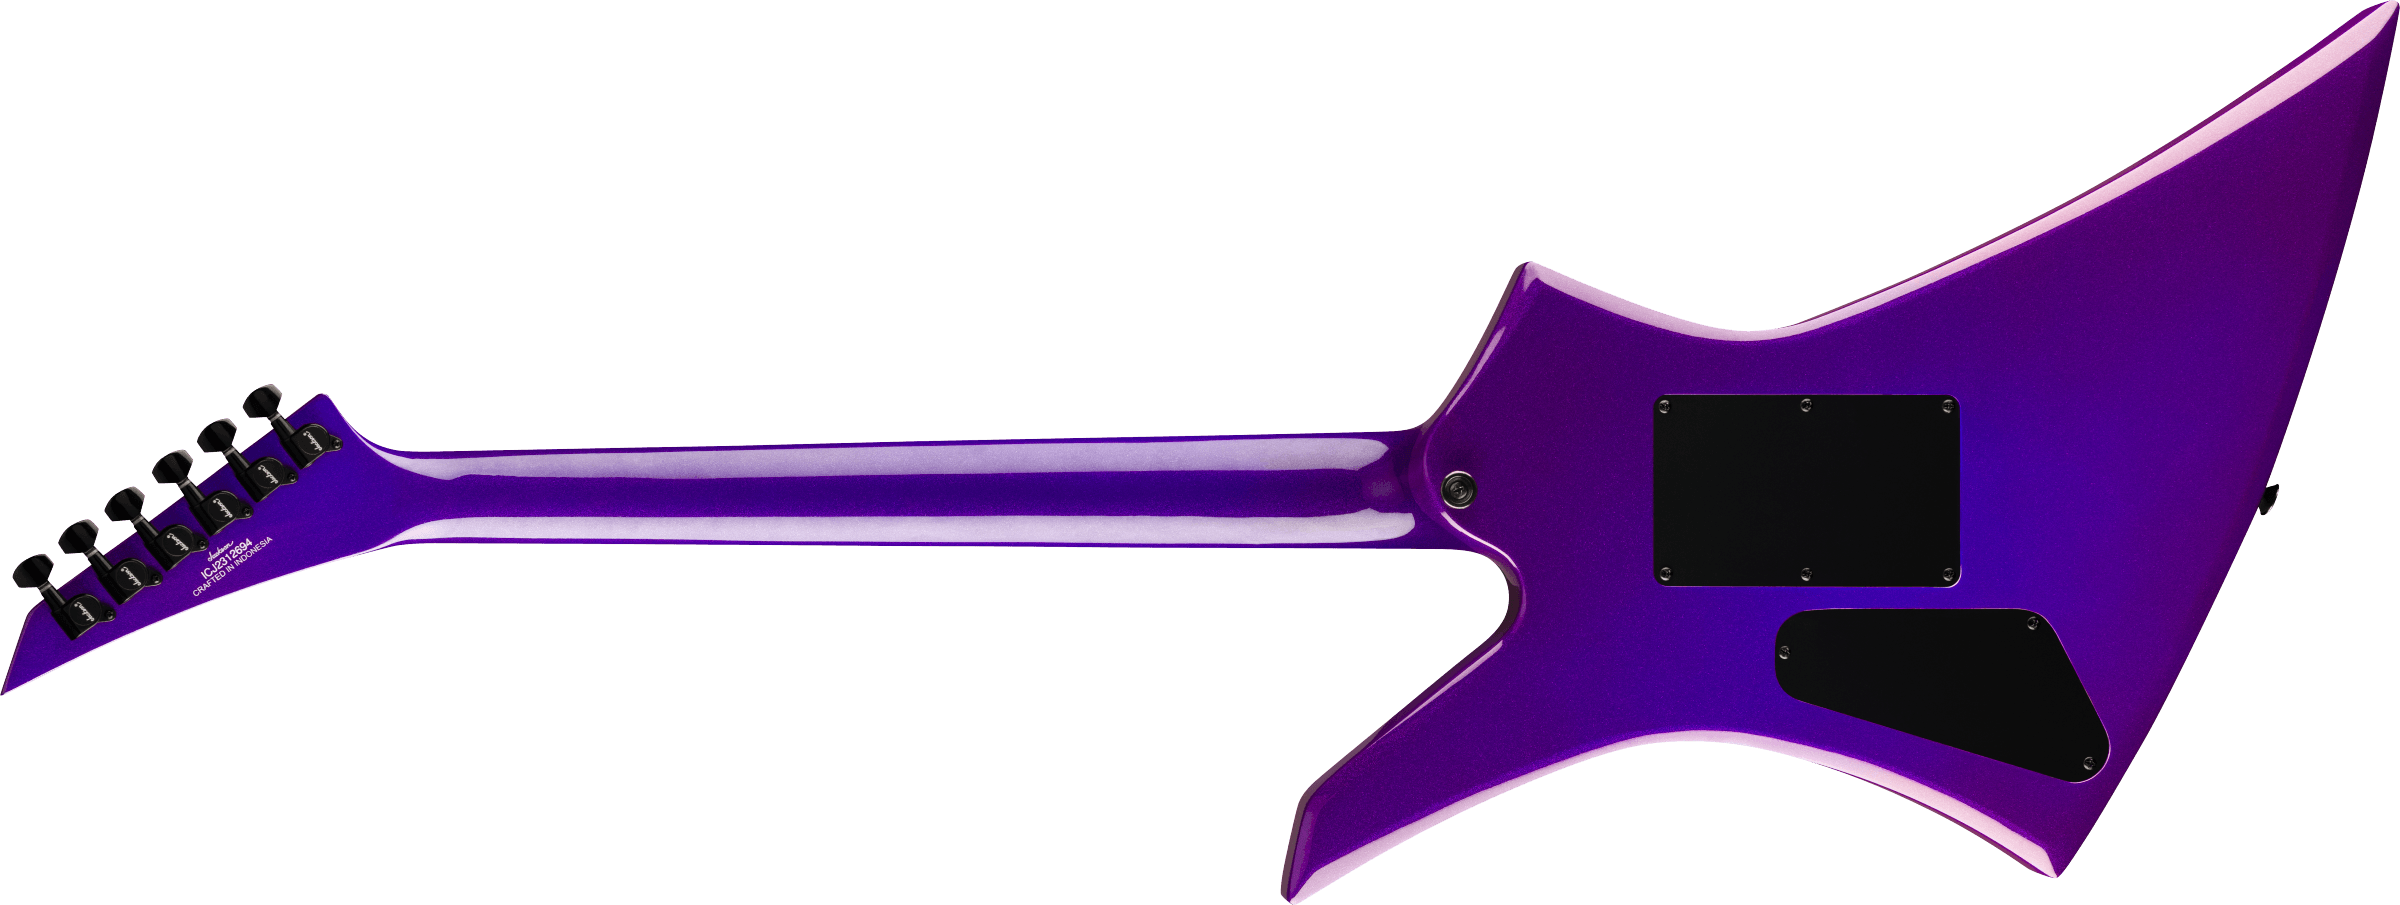 Jackson Kelly Kex X-series Trem Fr Hh Lau - Deep Purple Metallic - Guitarra electrica metalica - Variation 1